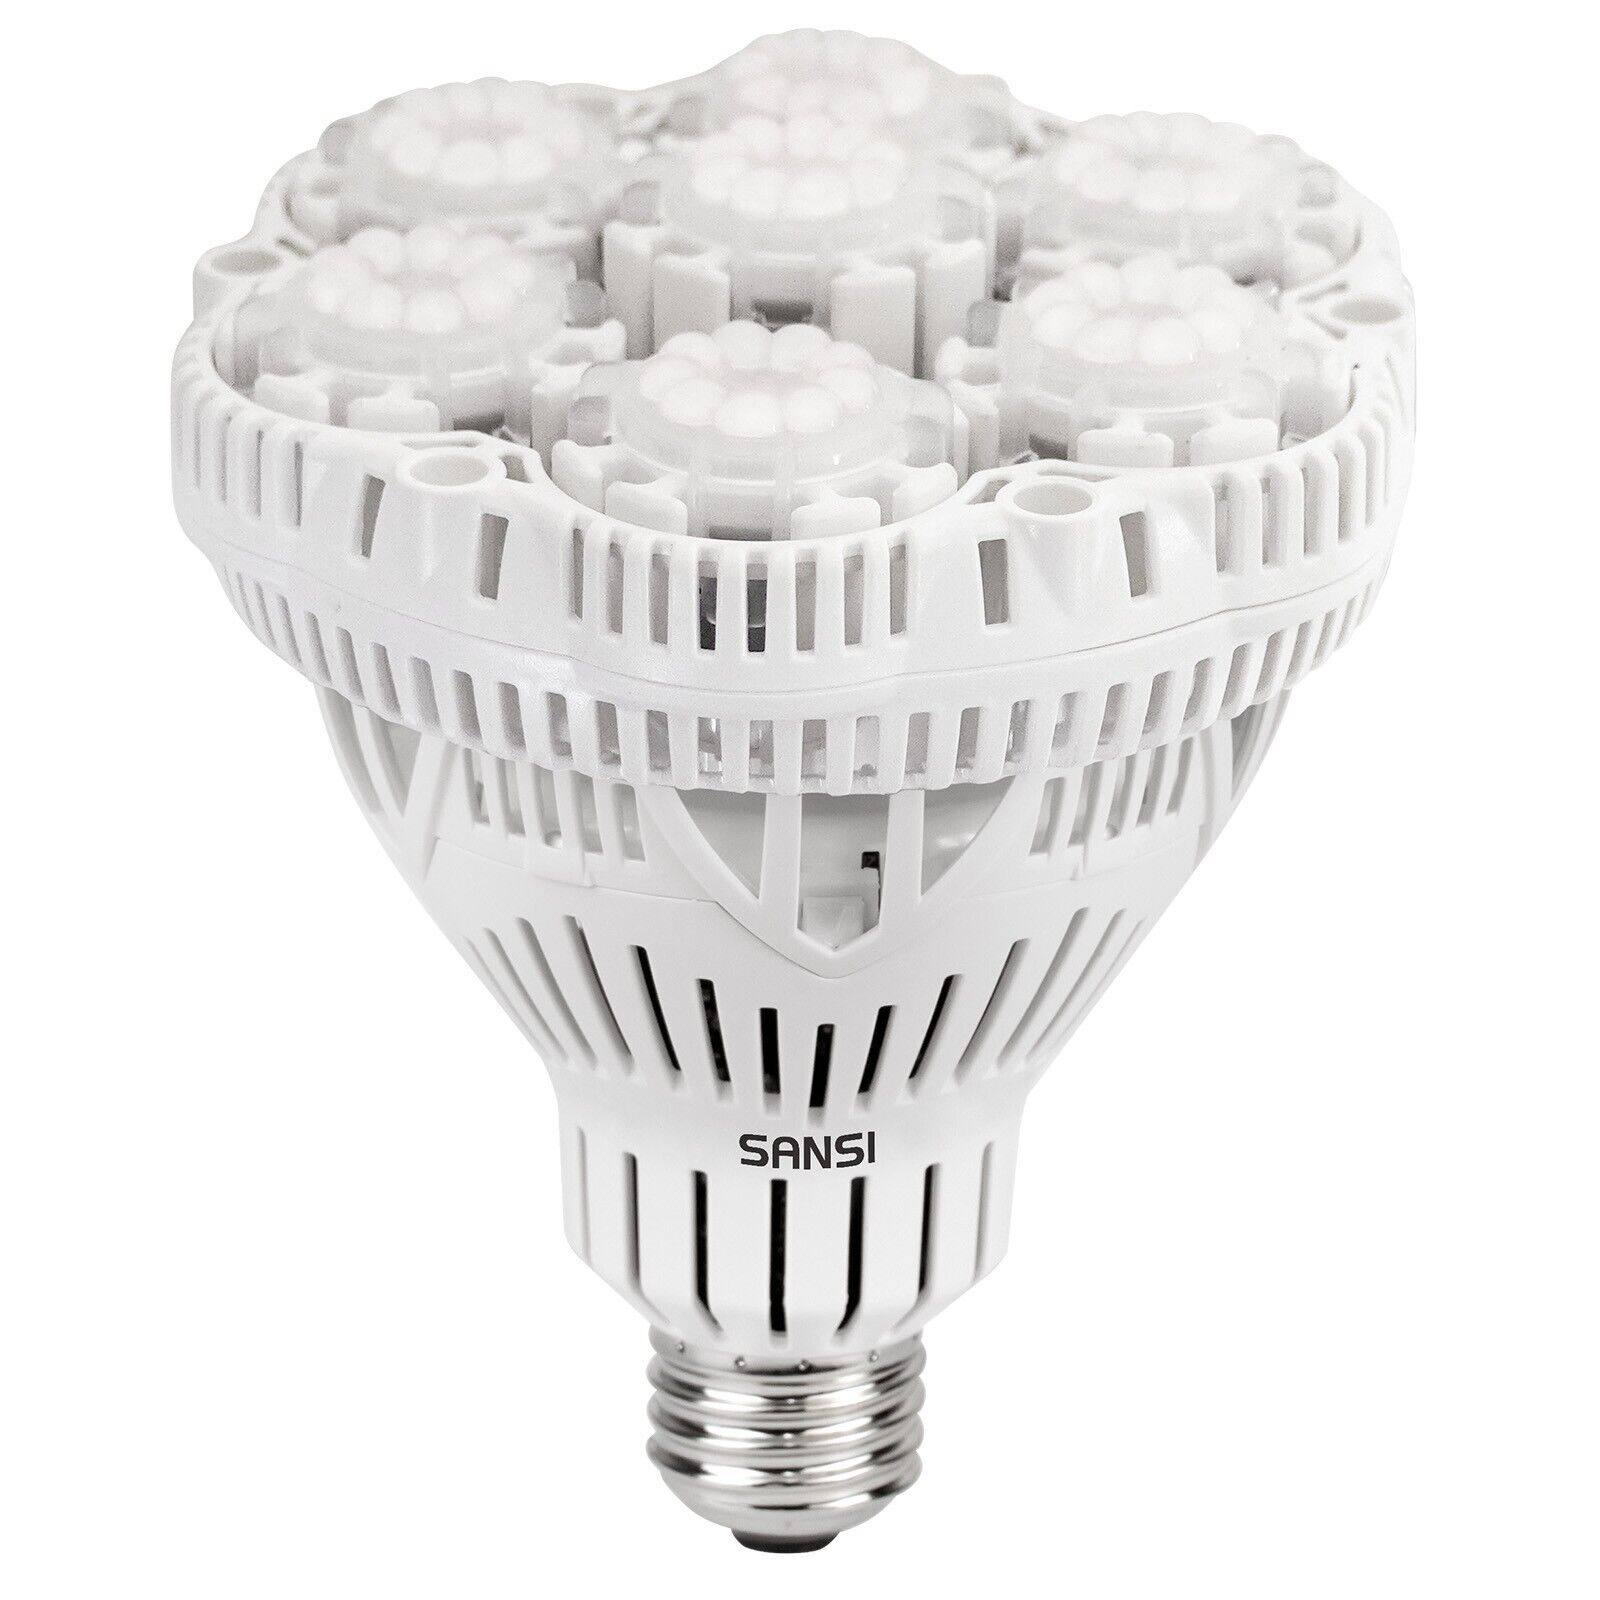 SANSI 400W=36W LED Grow Light Bulb Full Spectrum Indoor Tent Seeding Plant Lamp